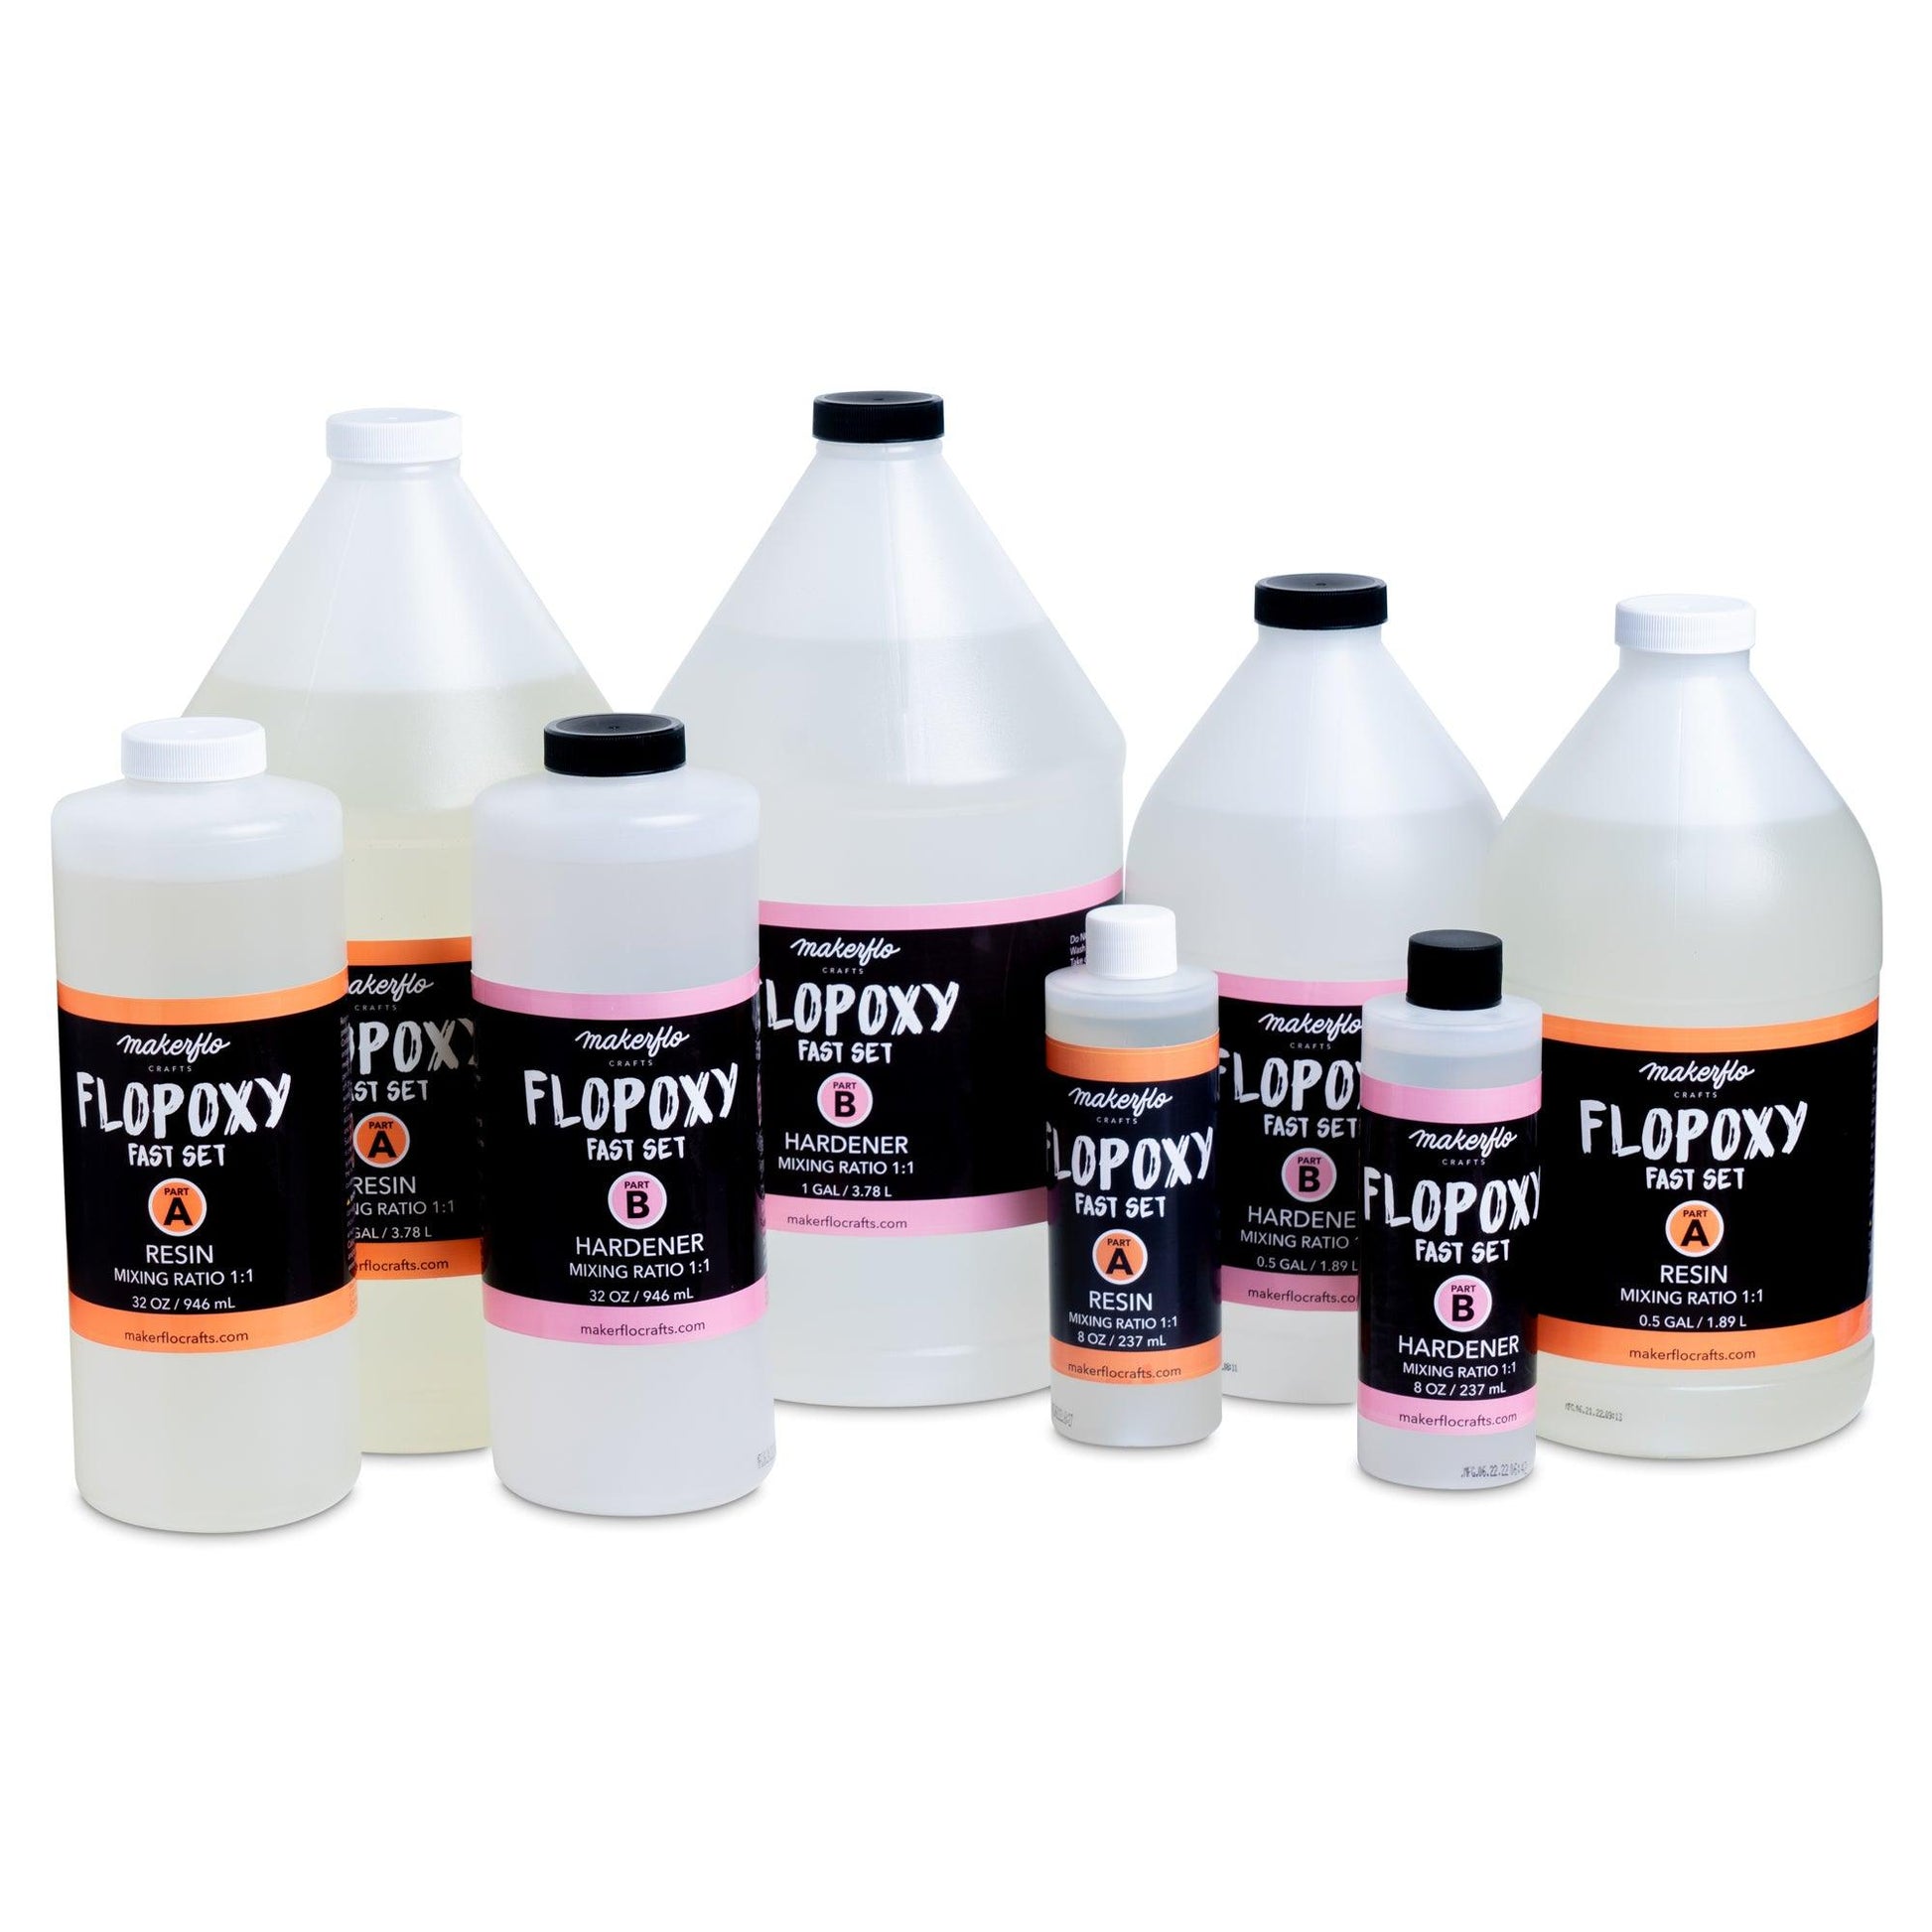 Epoxy Resin Kit, 42 oz / 1100 ml Crystal Clear Epoxy El Salvador